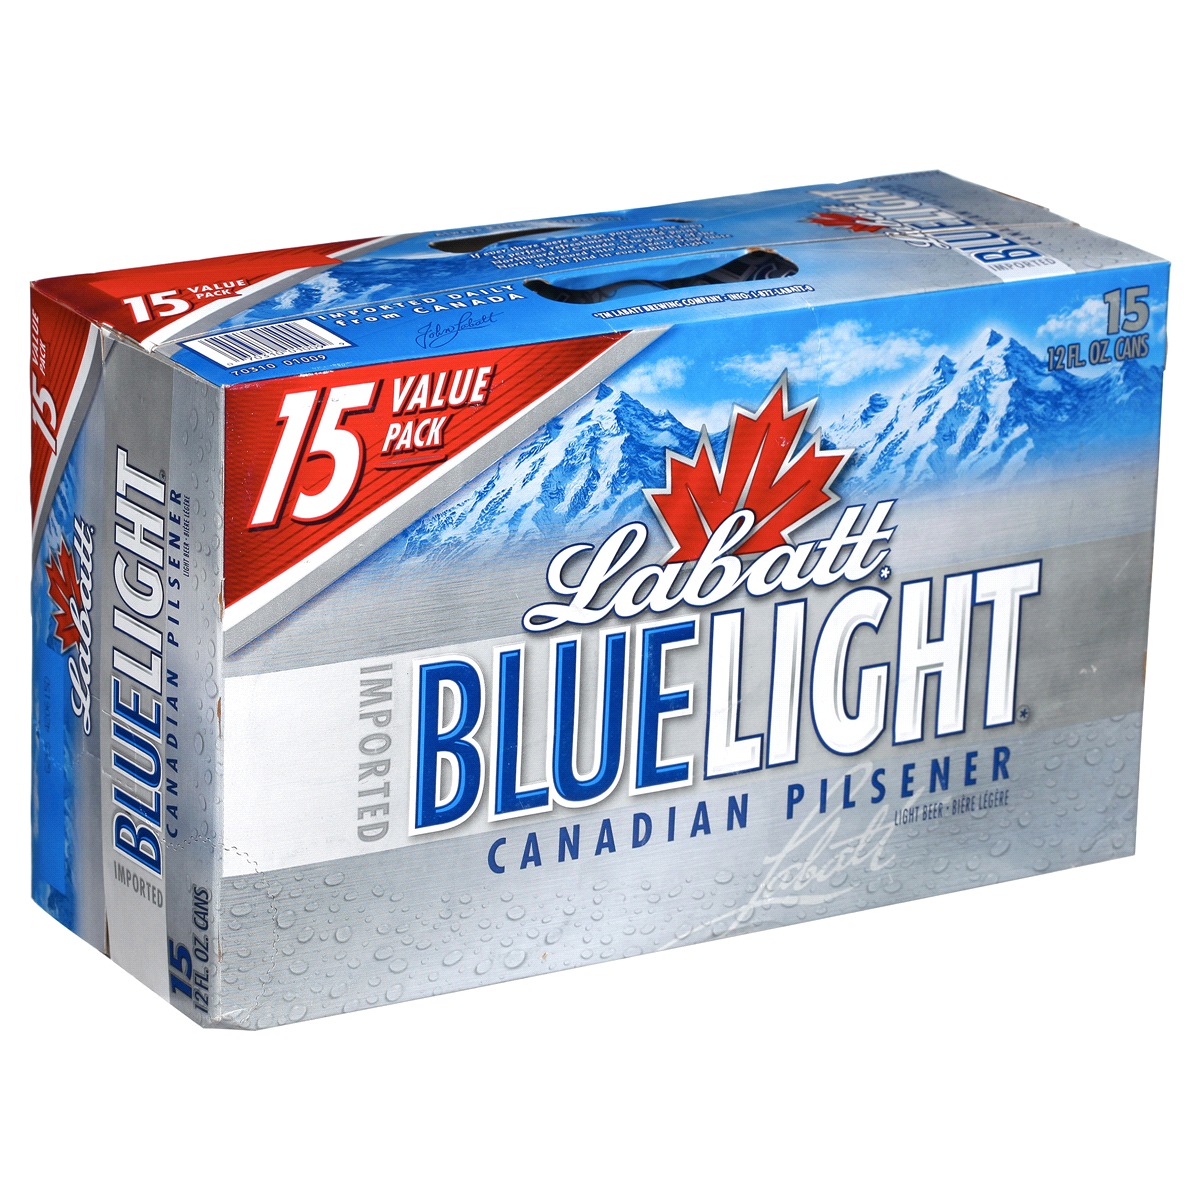 free-12-pack-of-blue-moon-lightsky-beer-at-walmart-dollar-general